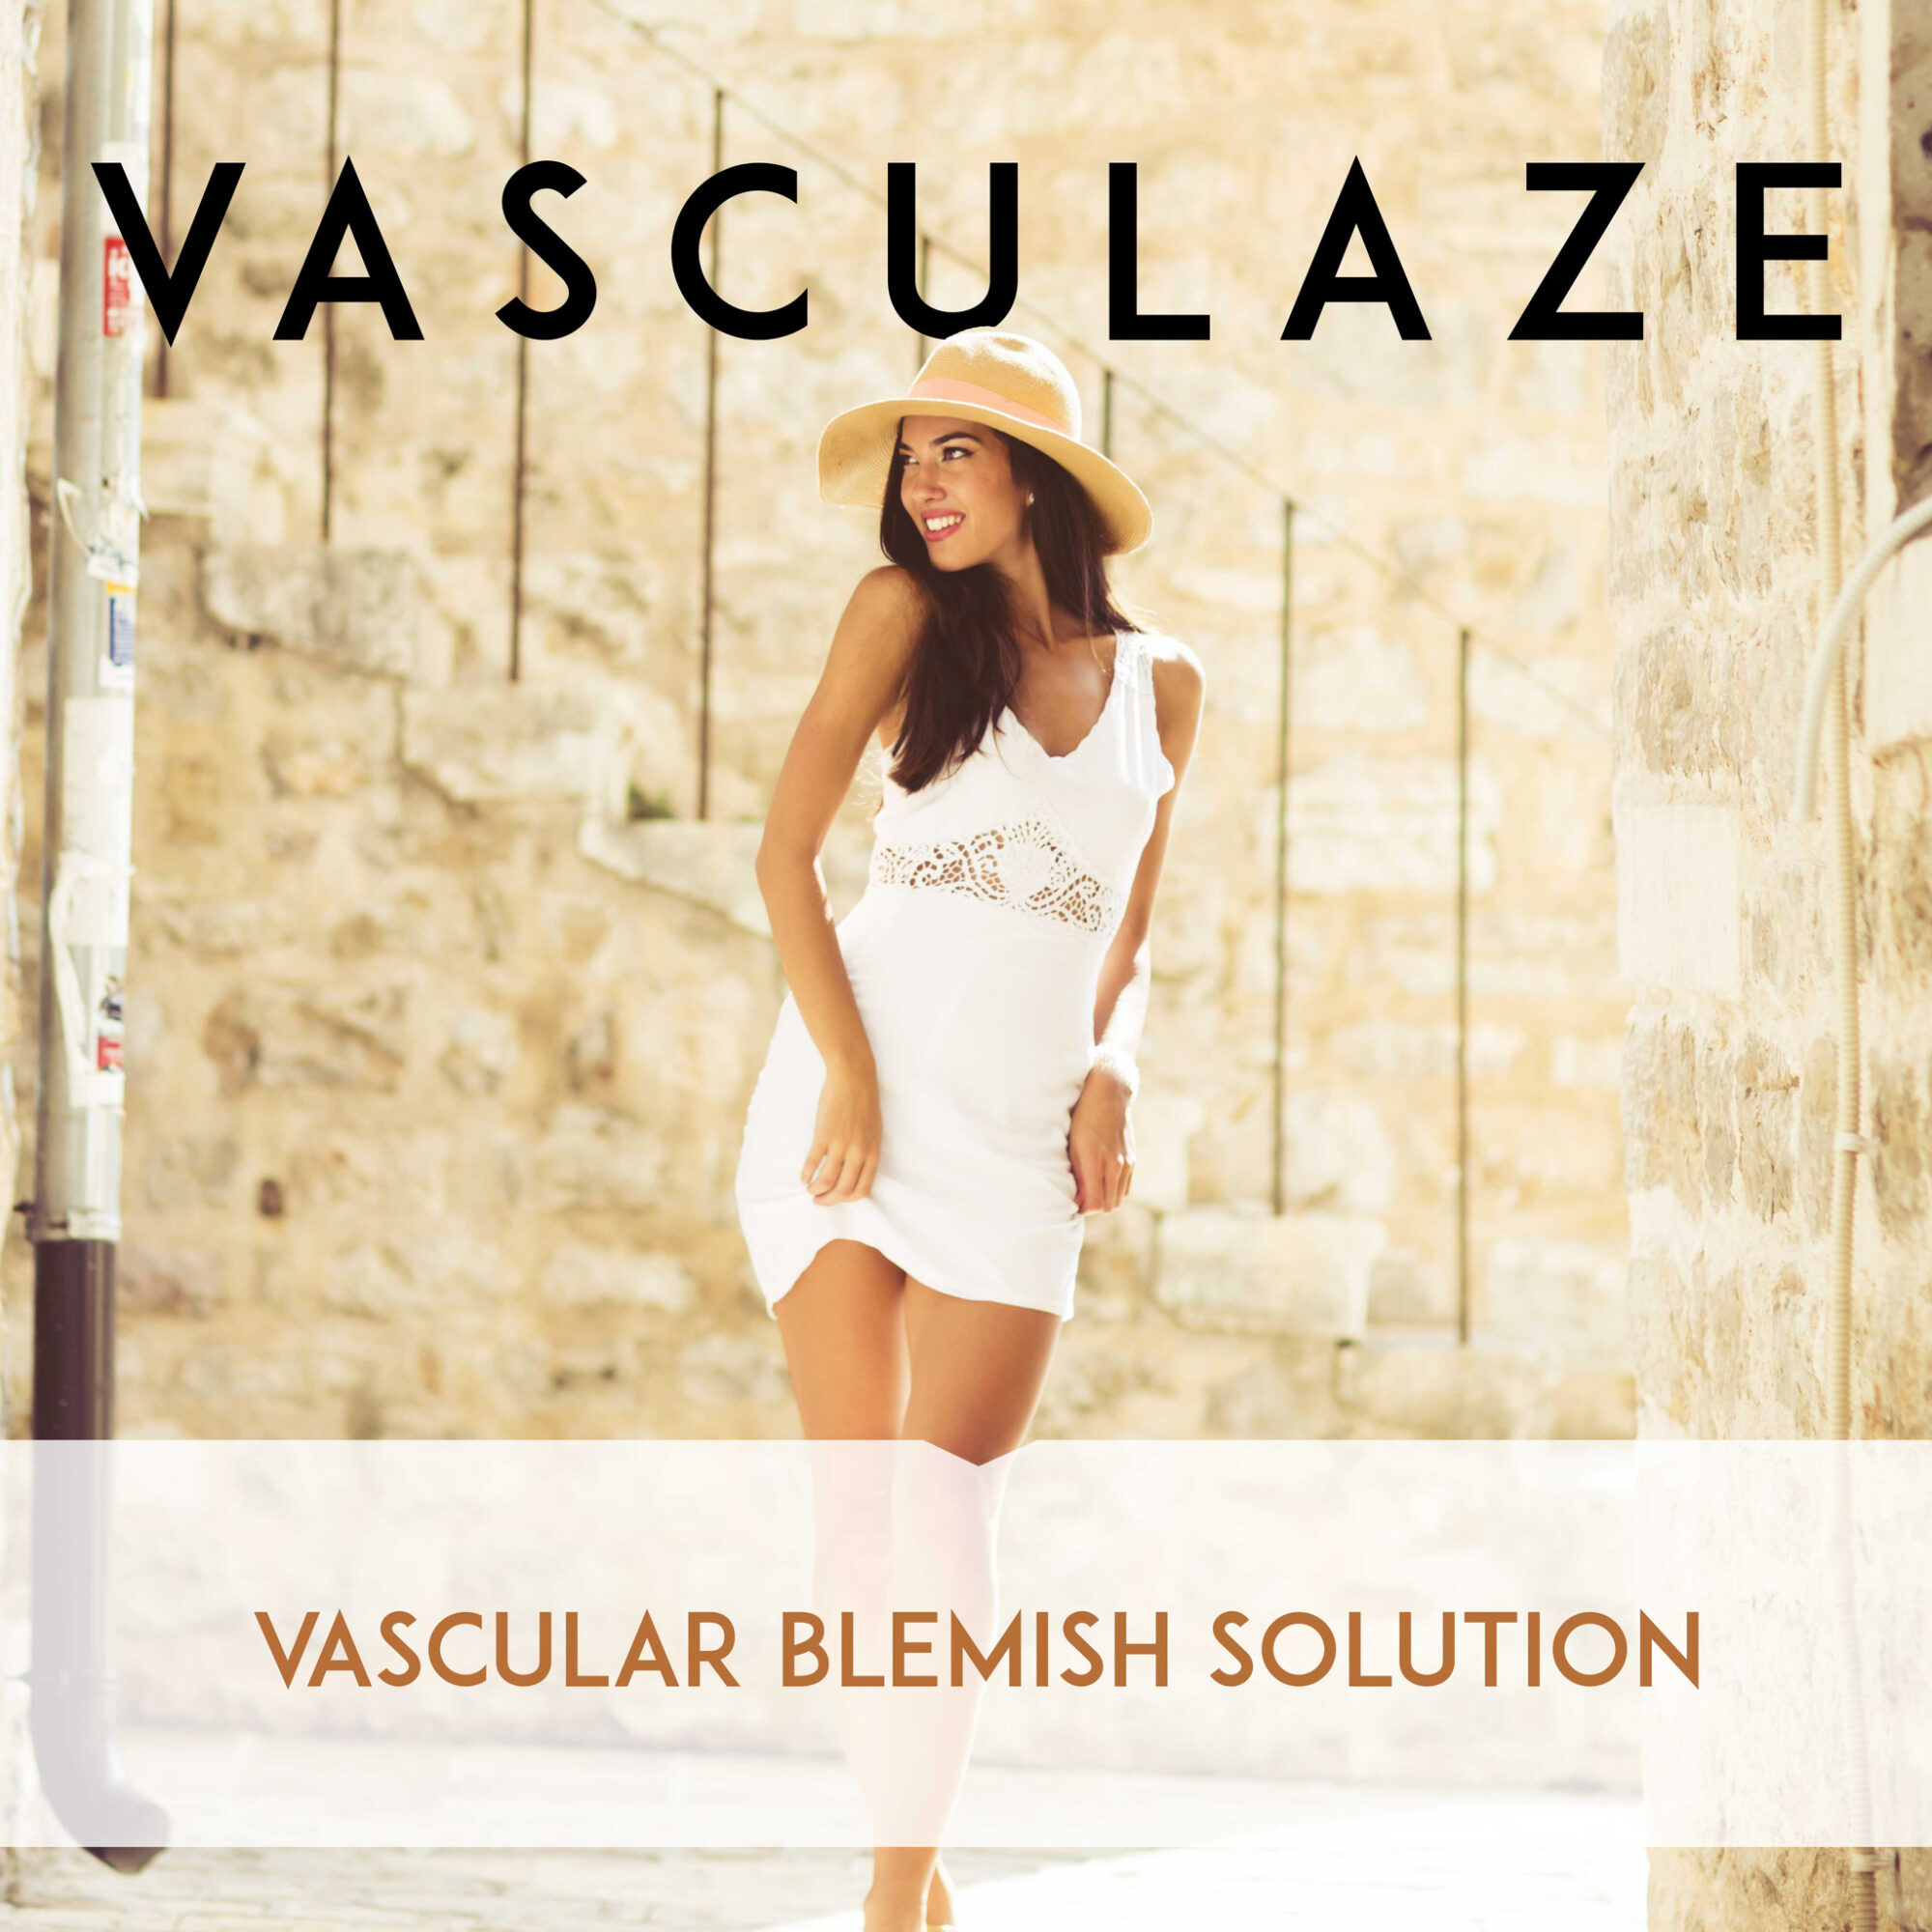 How Does Vasculaze Work?